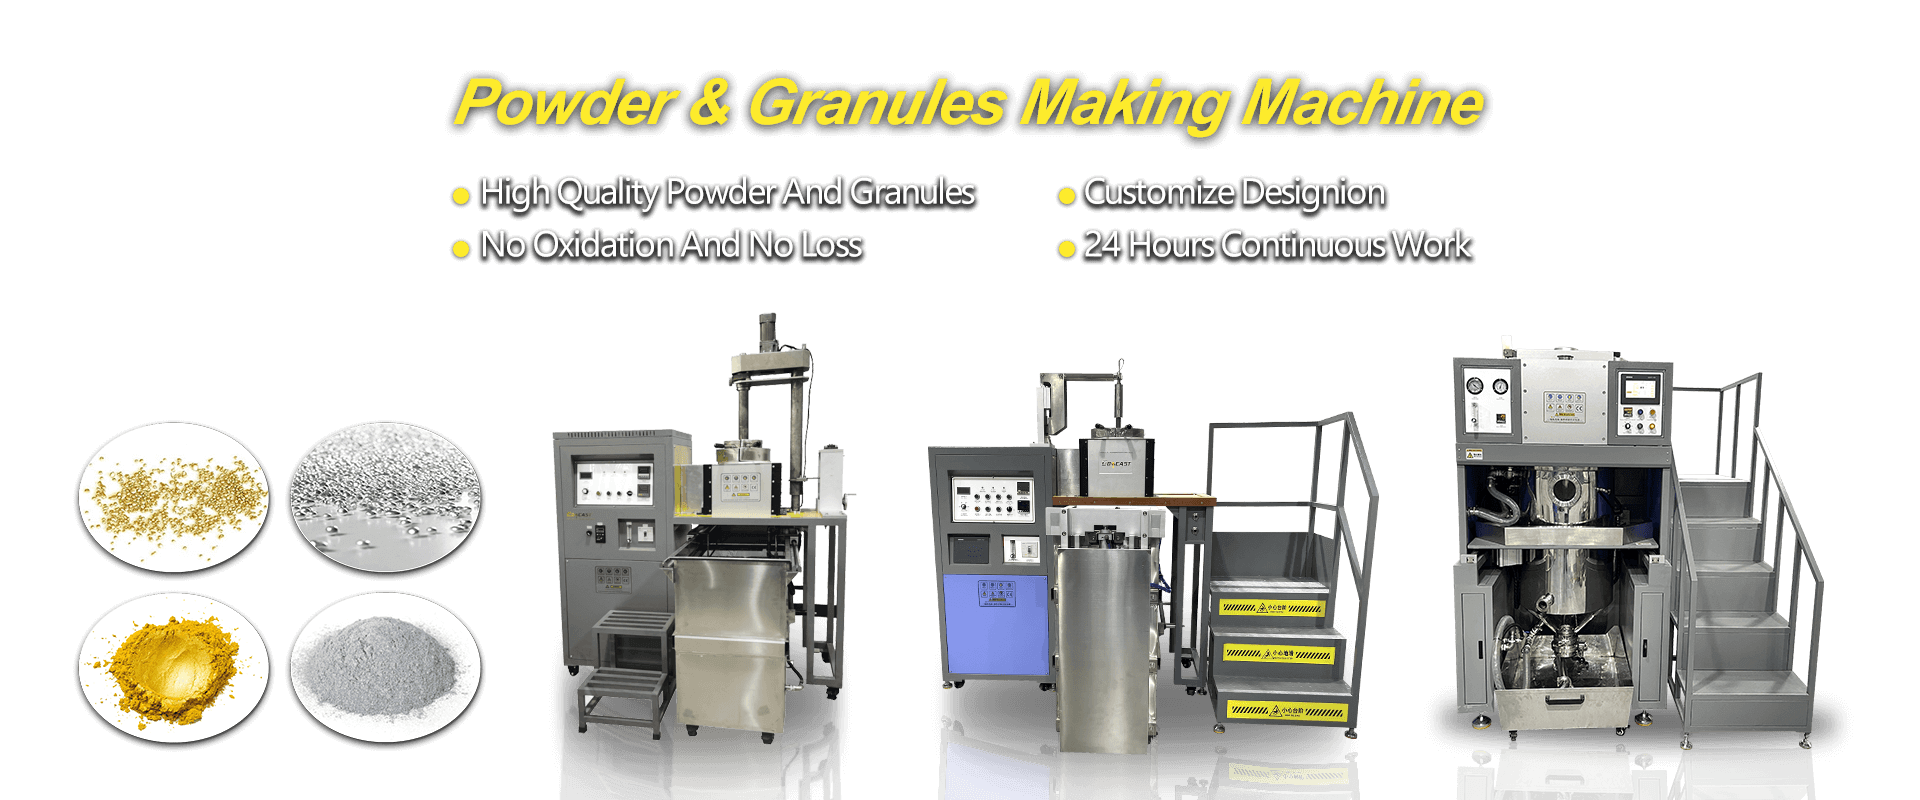 powder granules making machine